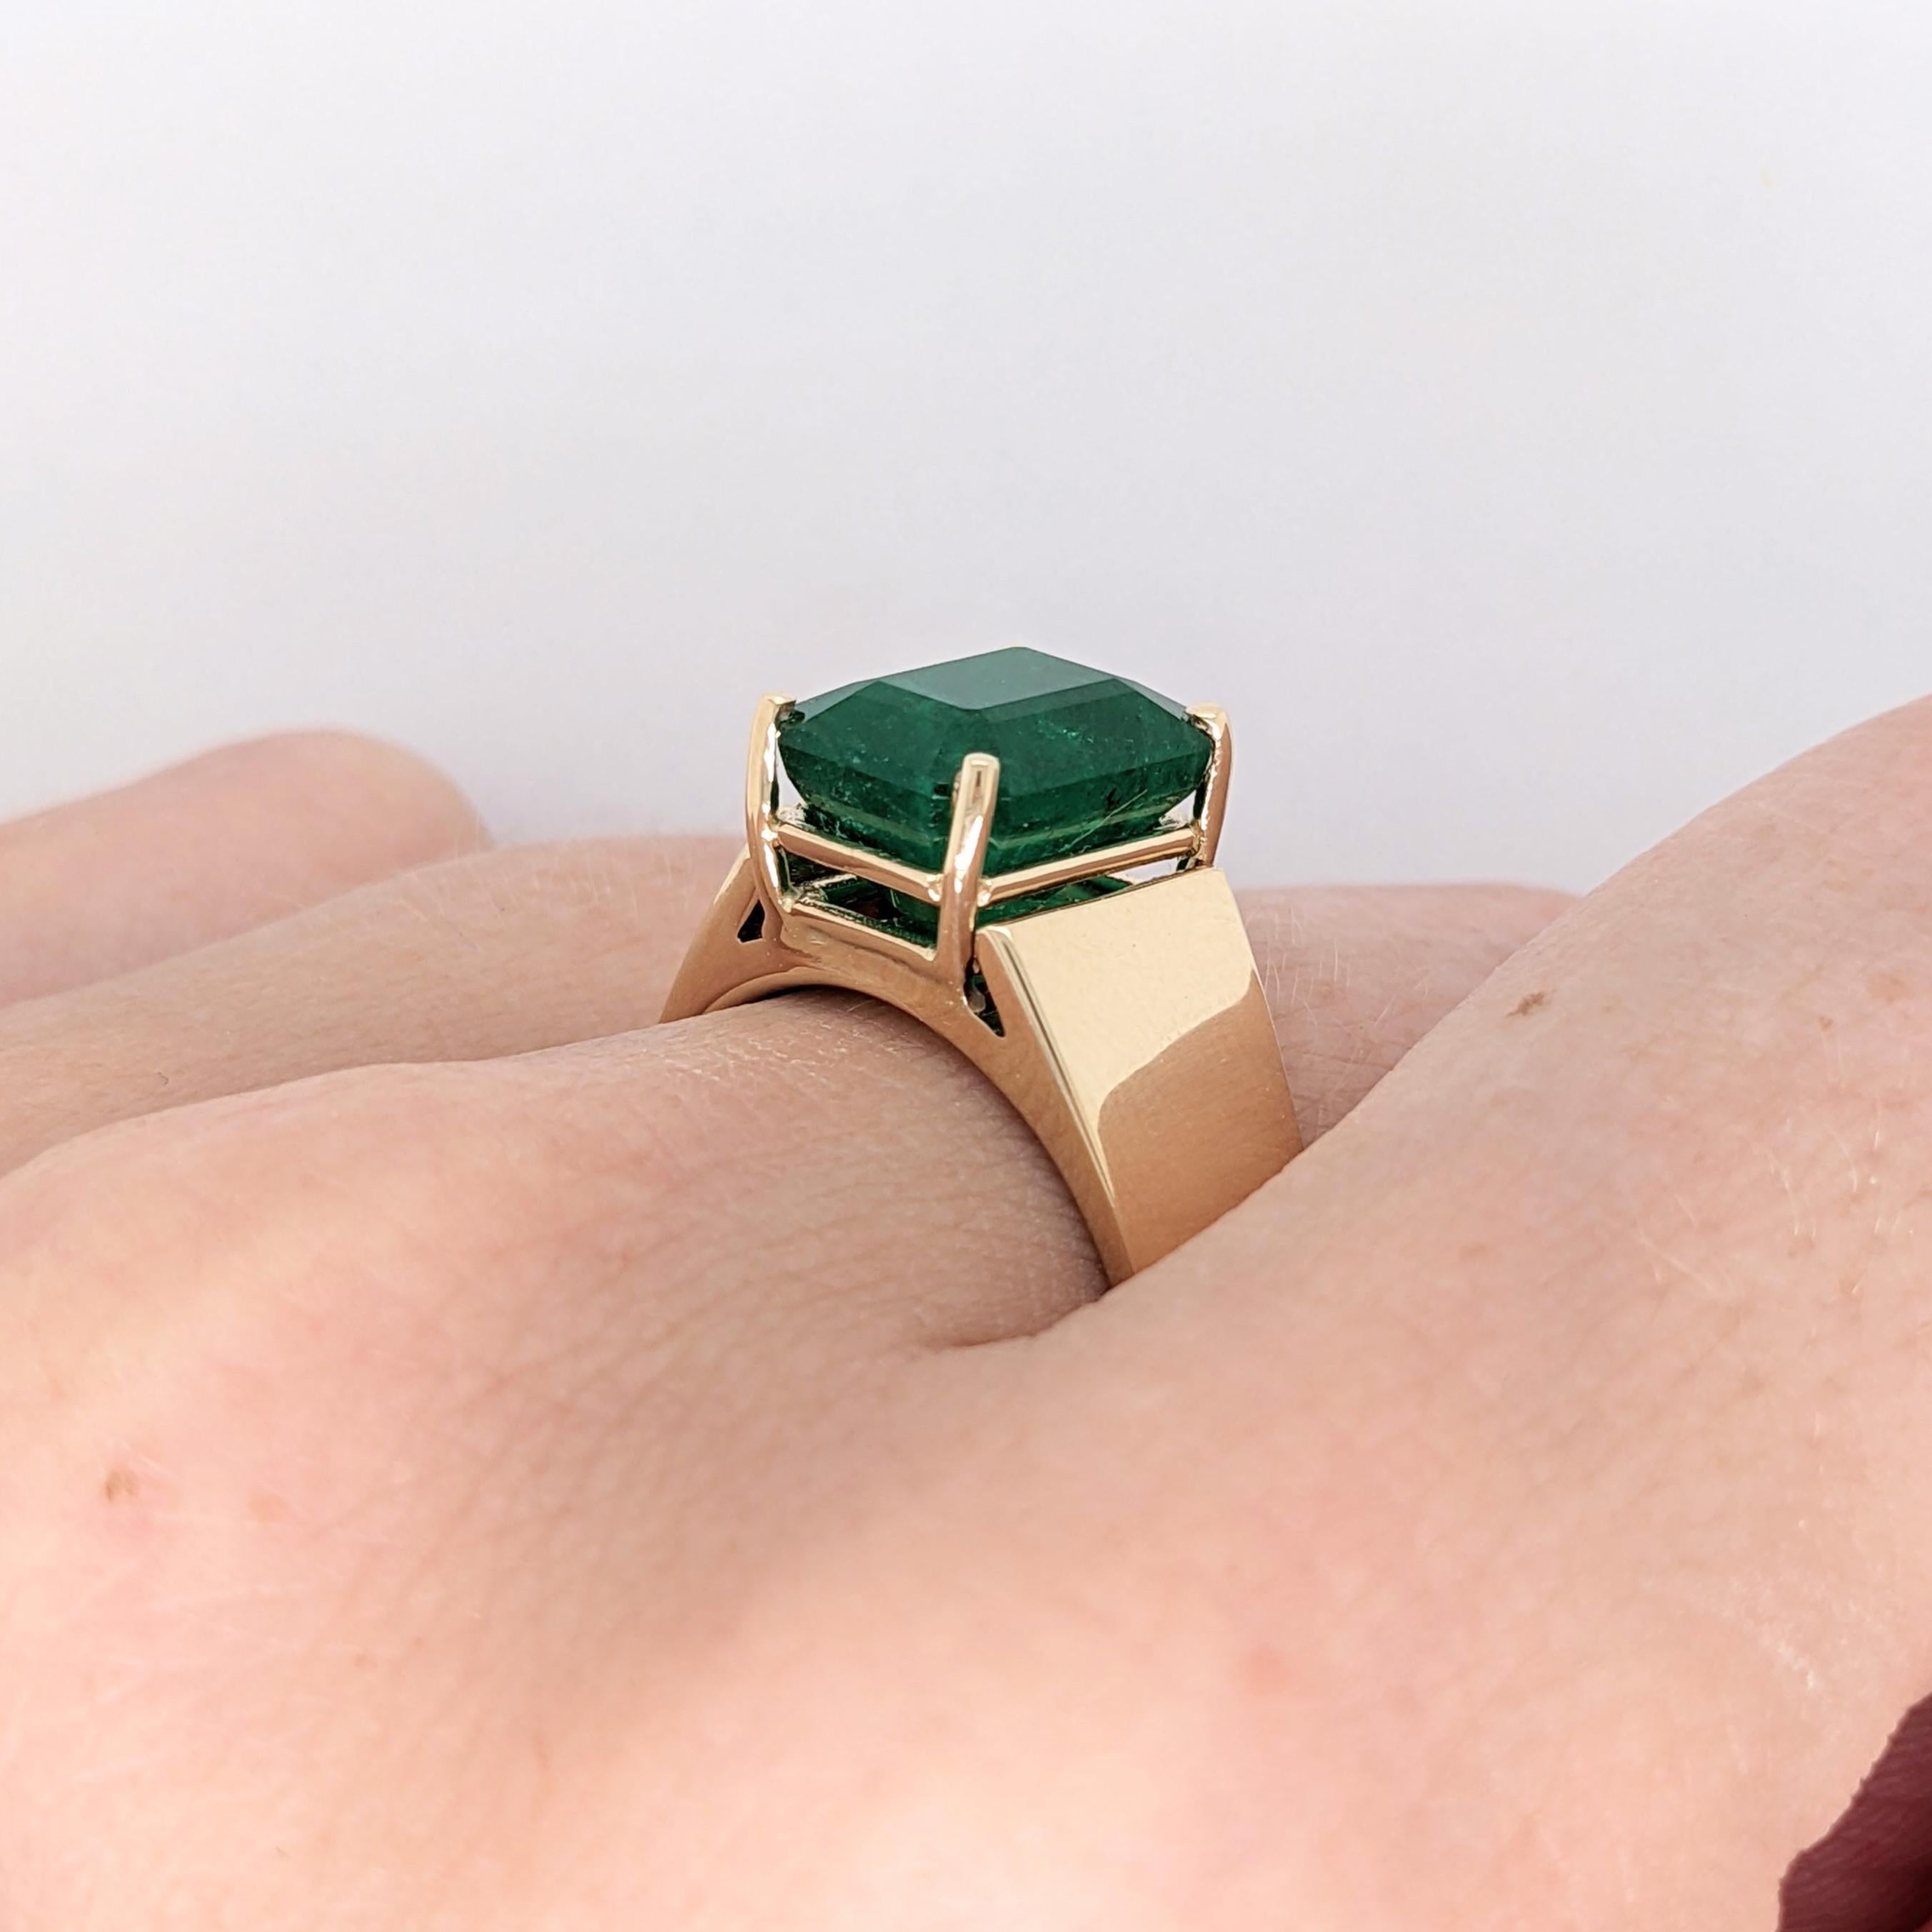 6 carat Zambian Emerald Cigar Band Ring in 14K Yellow Gold  Emerald Cut 10x8mm 2